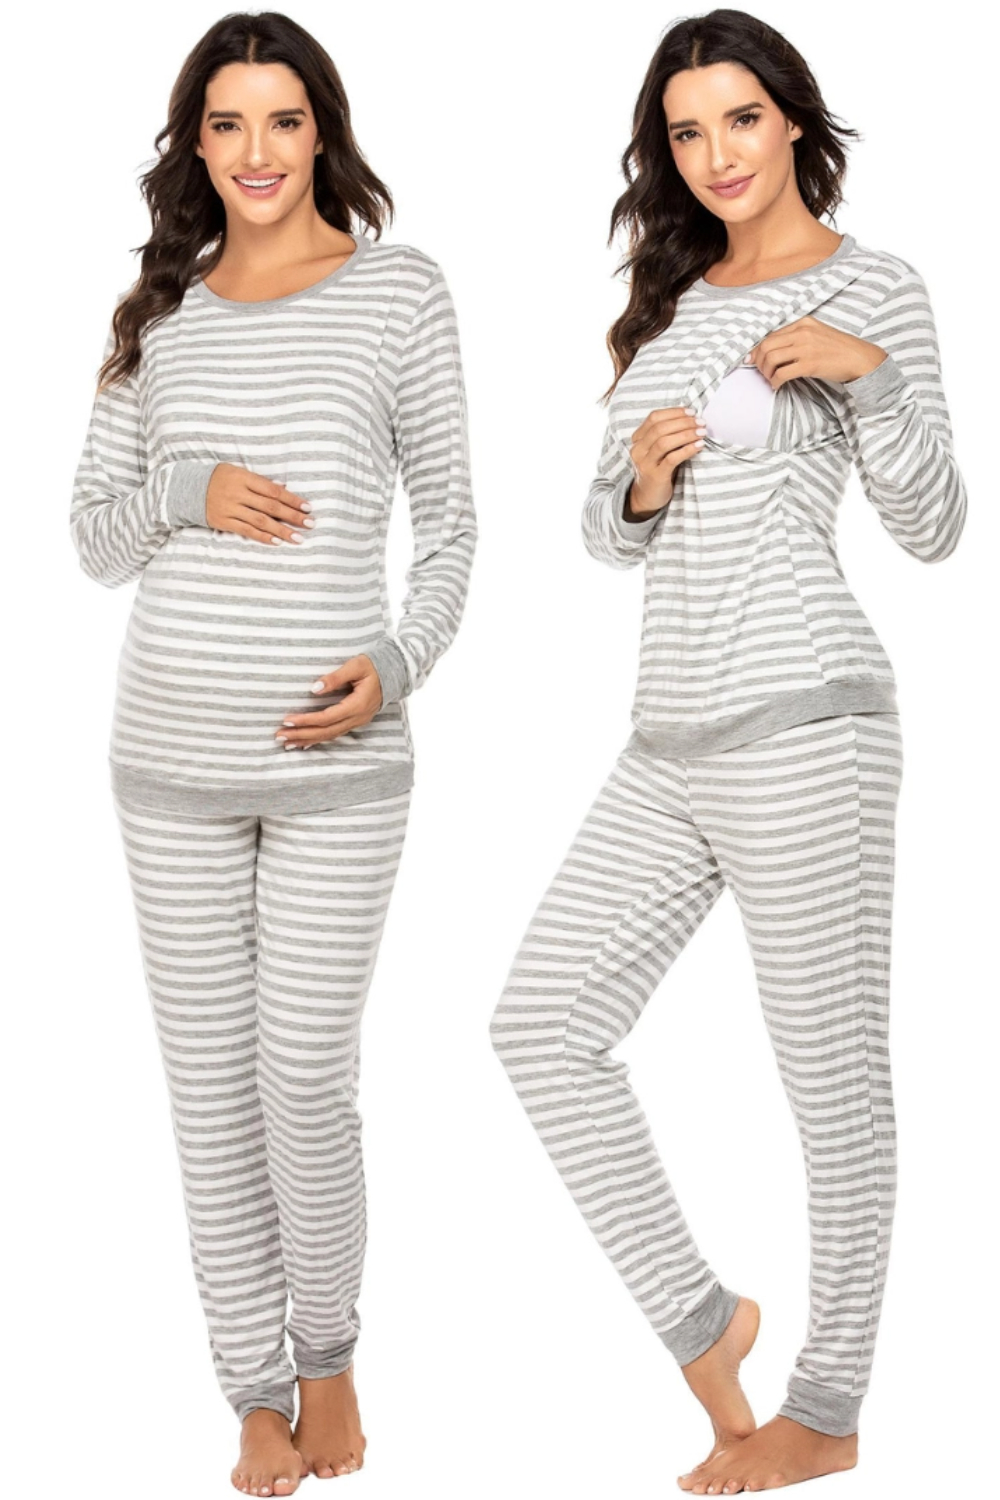 AXXD Pajamas For Women Striped Crew Neck Adult Onesie Pajamas For Women ...